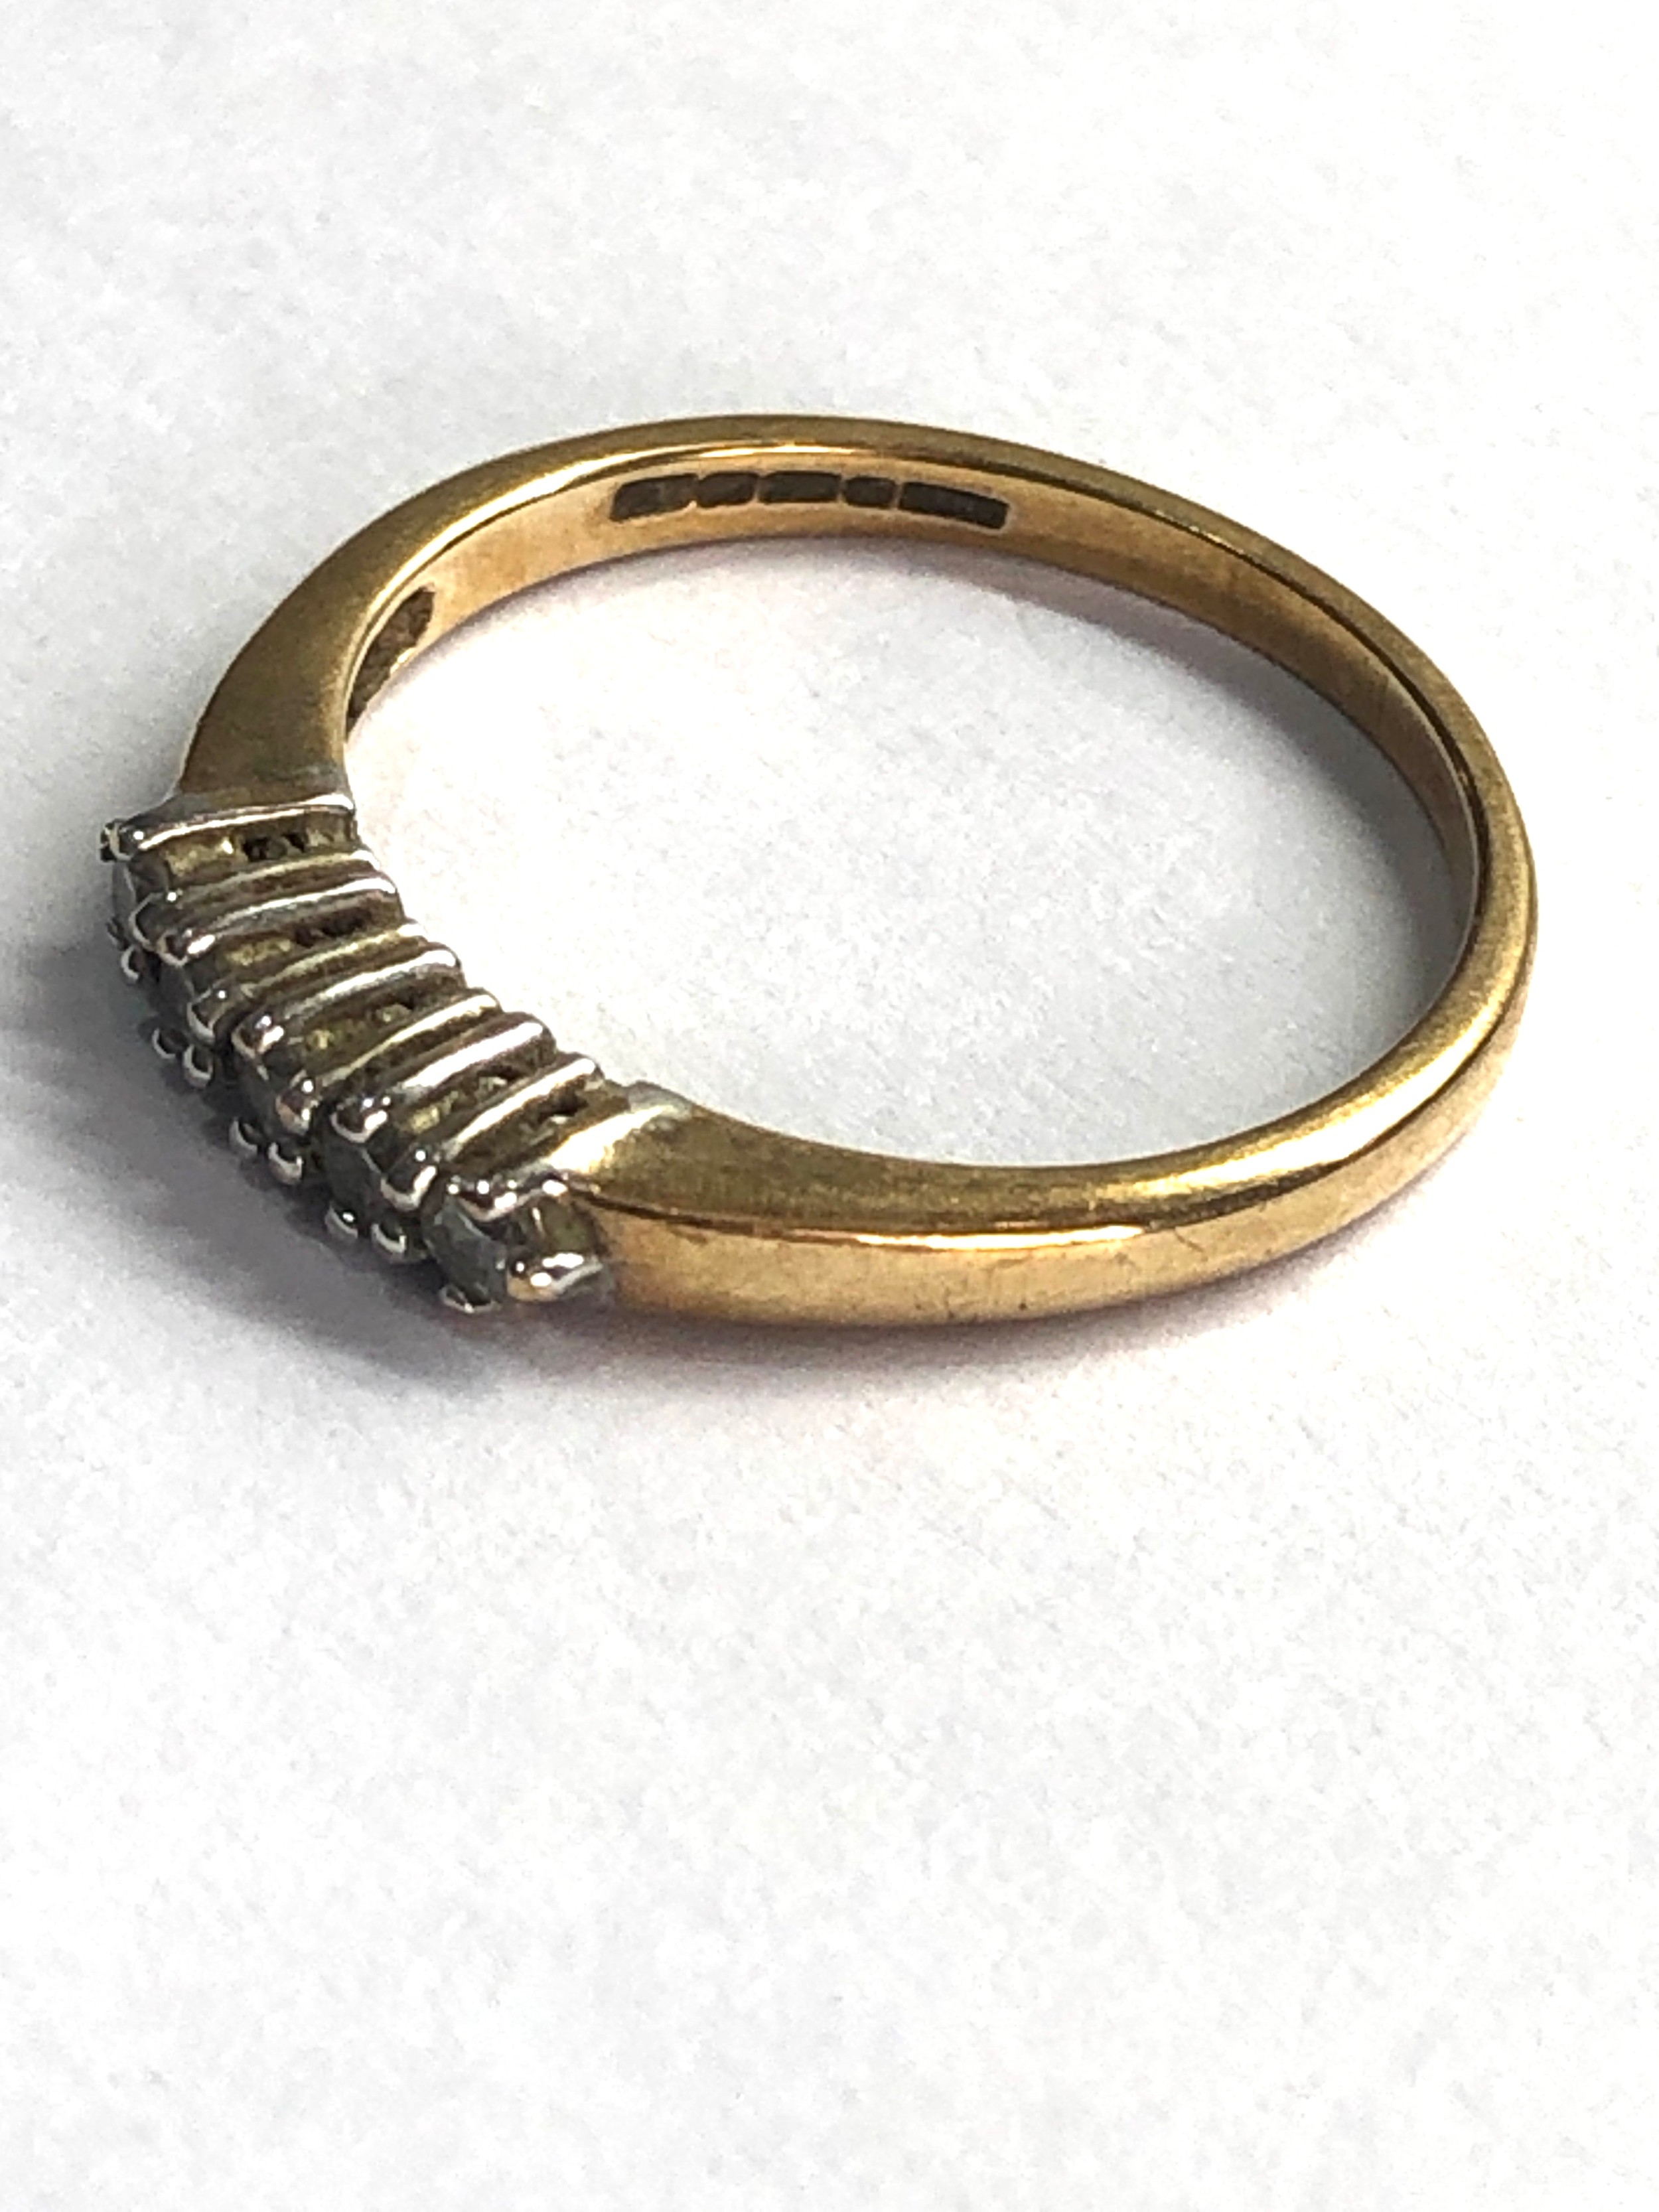 9ct gold diamond ring weight 1.6g - Image 2 of 3